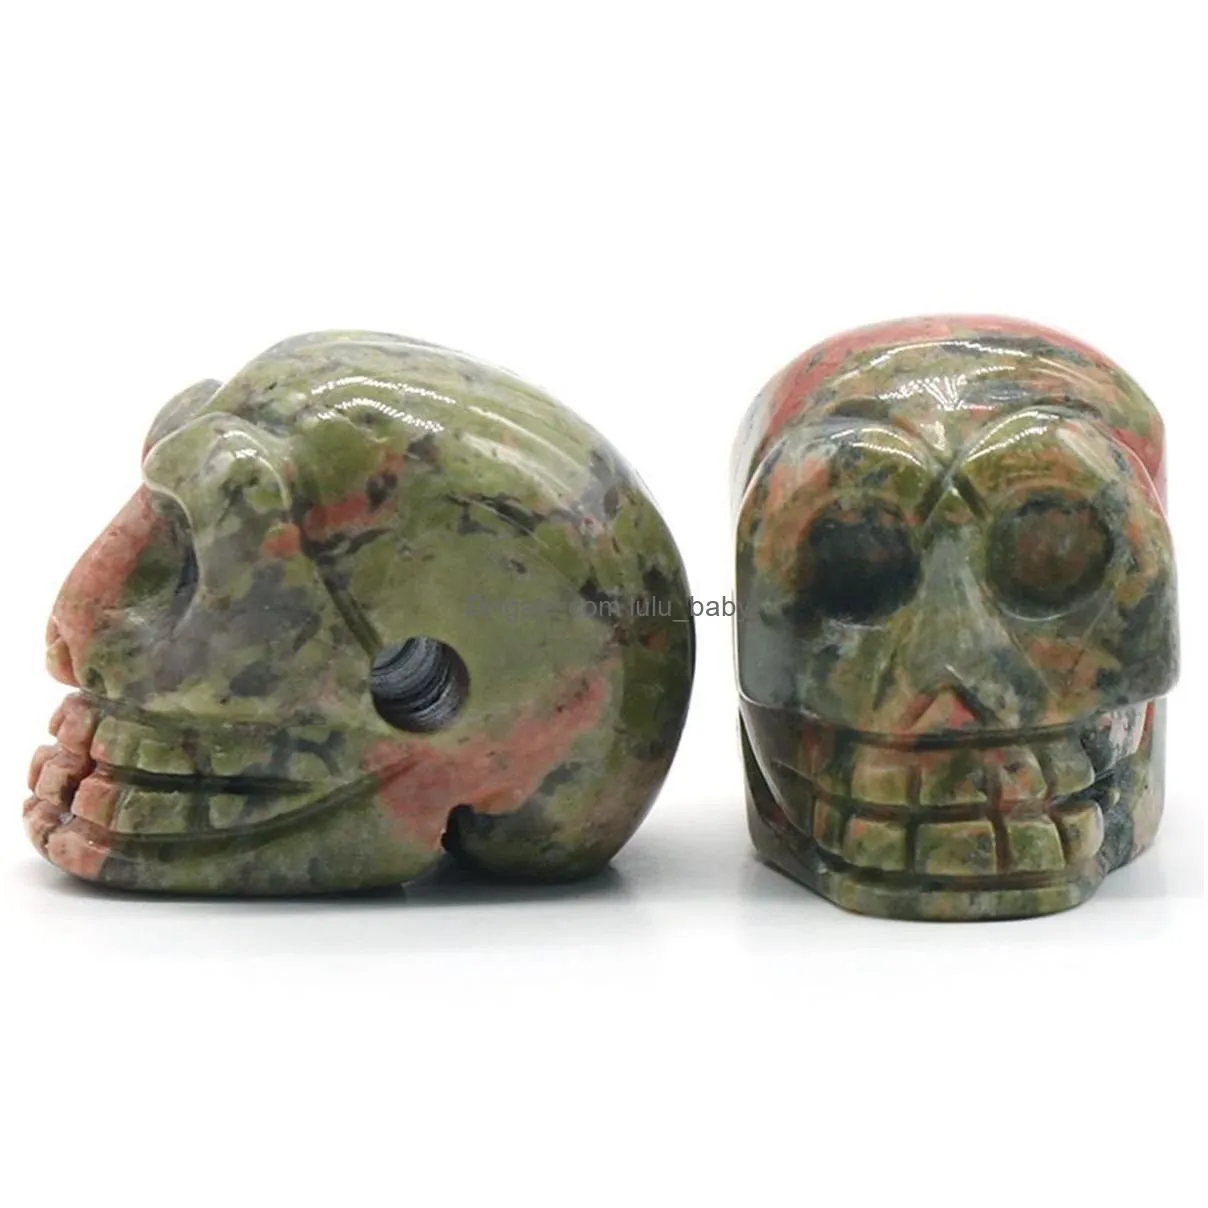 23mm natural malachite skull head statue hand carved gemstone human skeleton head figurines reiki healing stone for home office